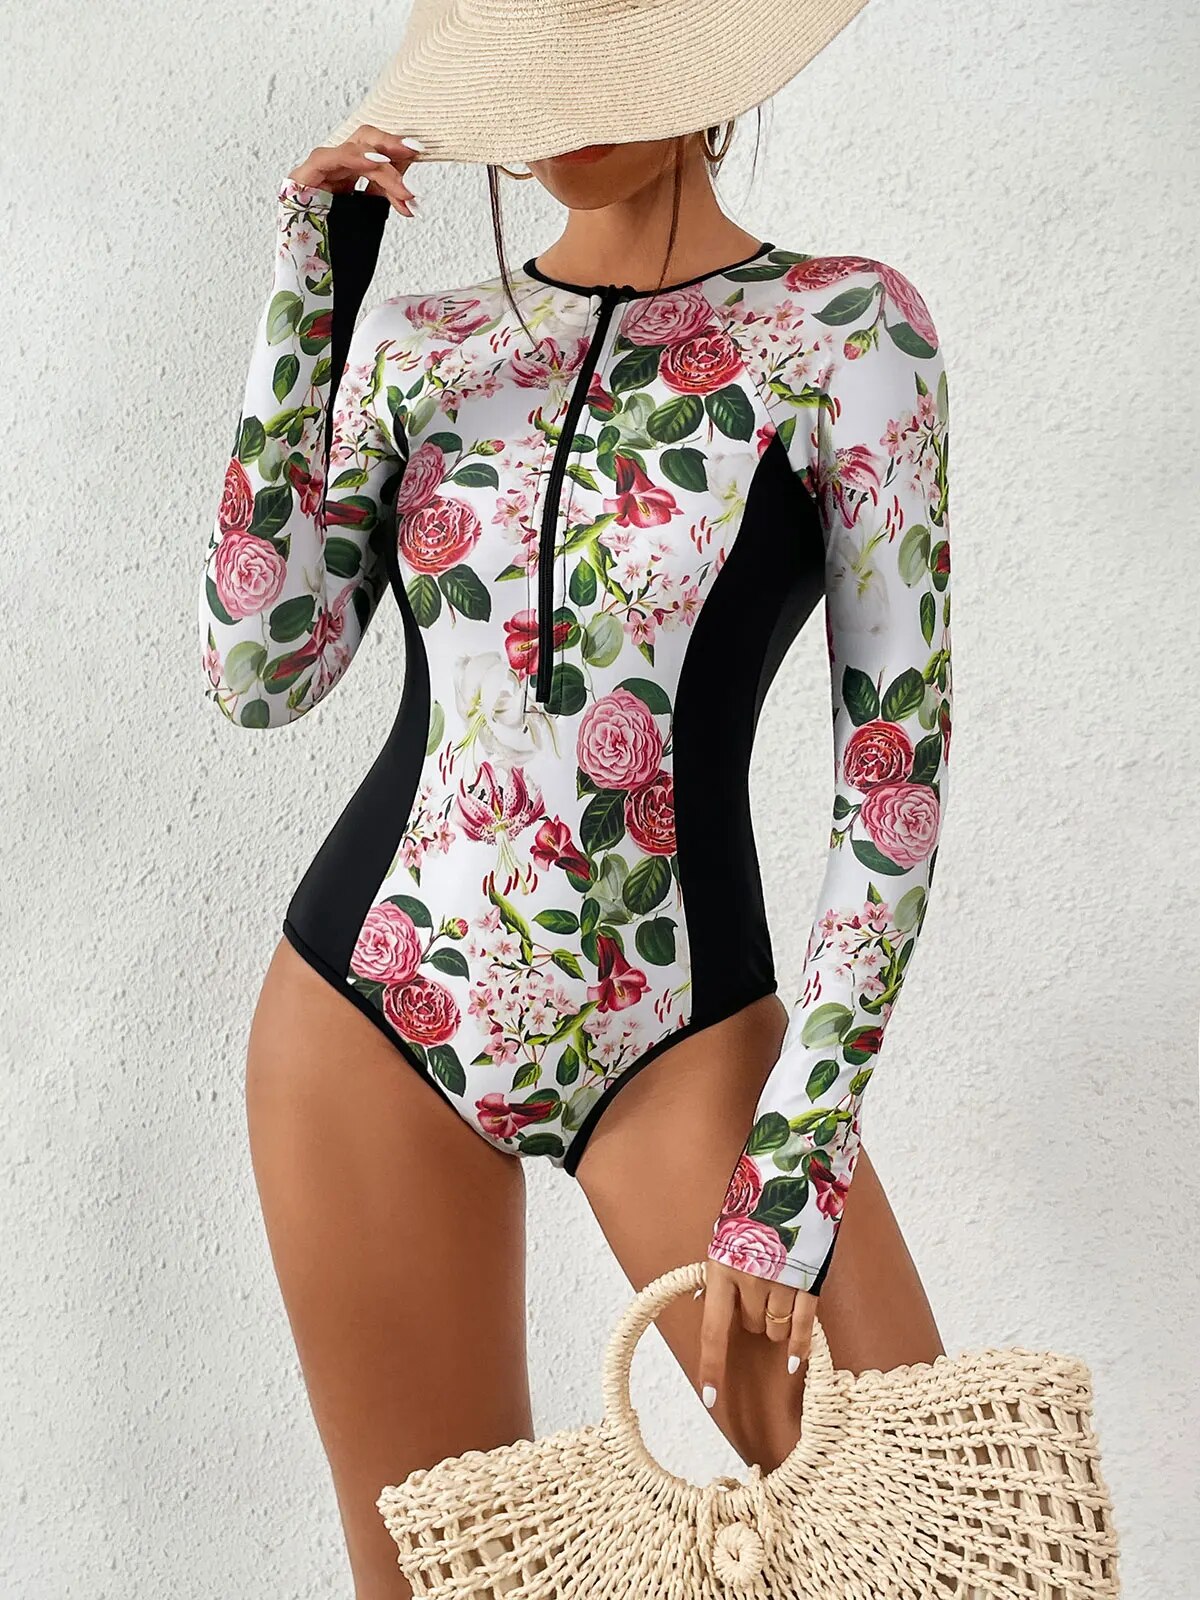 come4buy.com-Surfing Long Sleeve Swimwear Print Bathing Suit Women